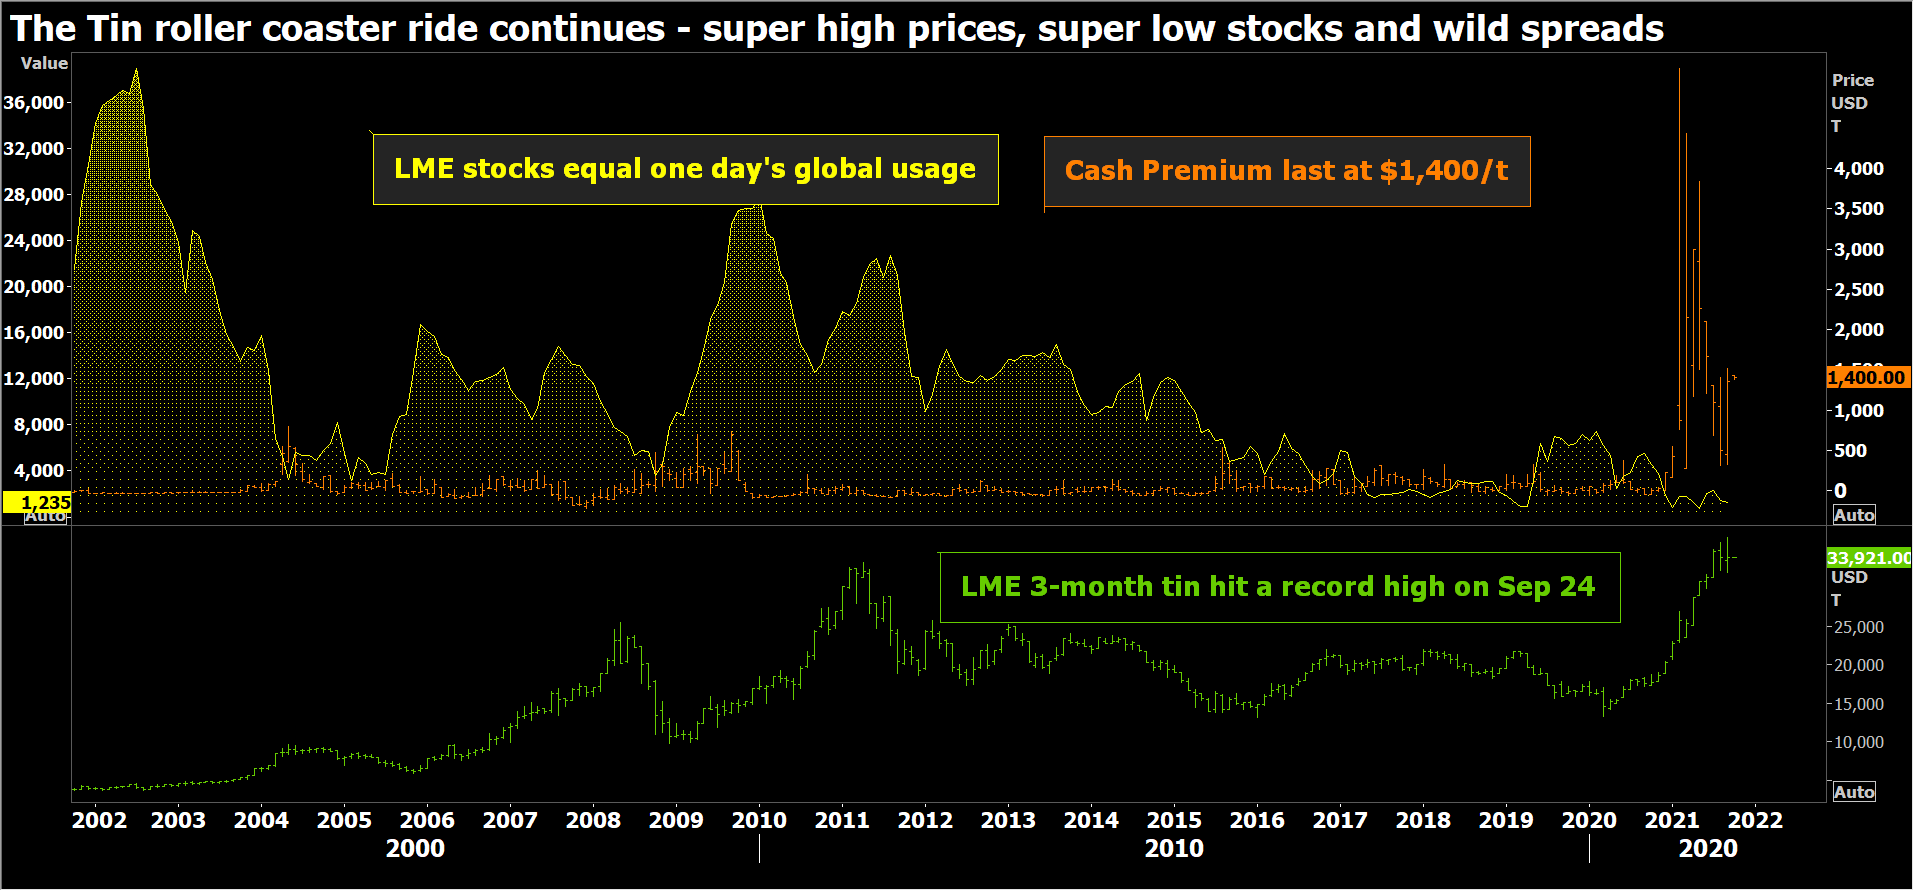 LME tin stocks, price and spreads